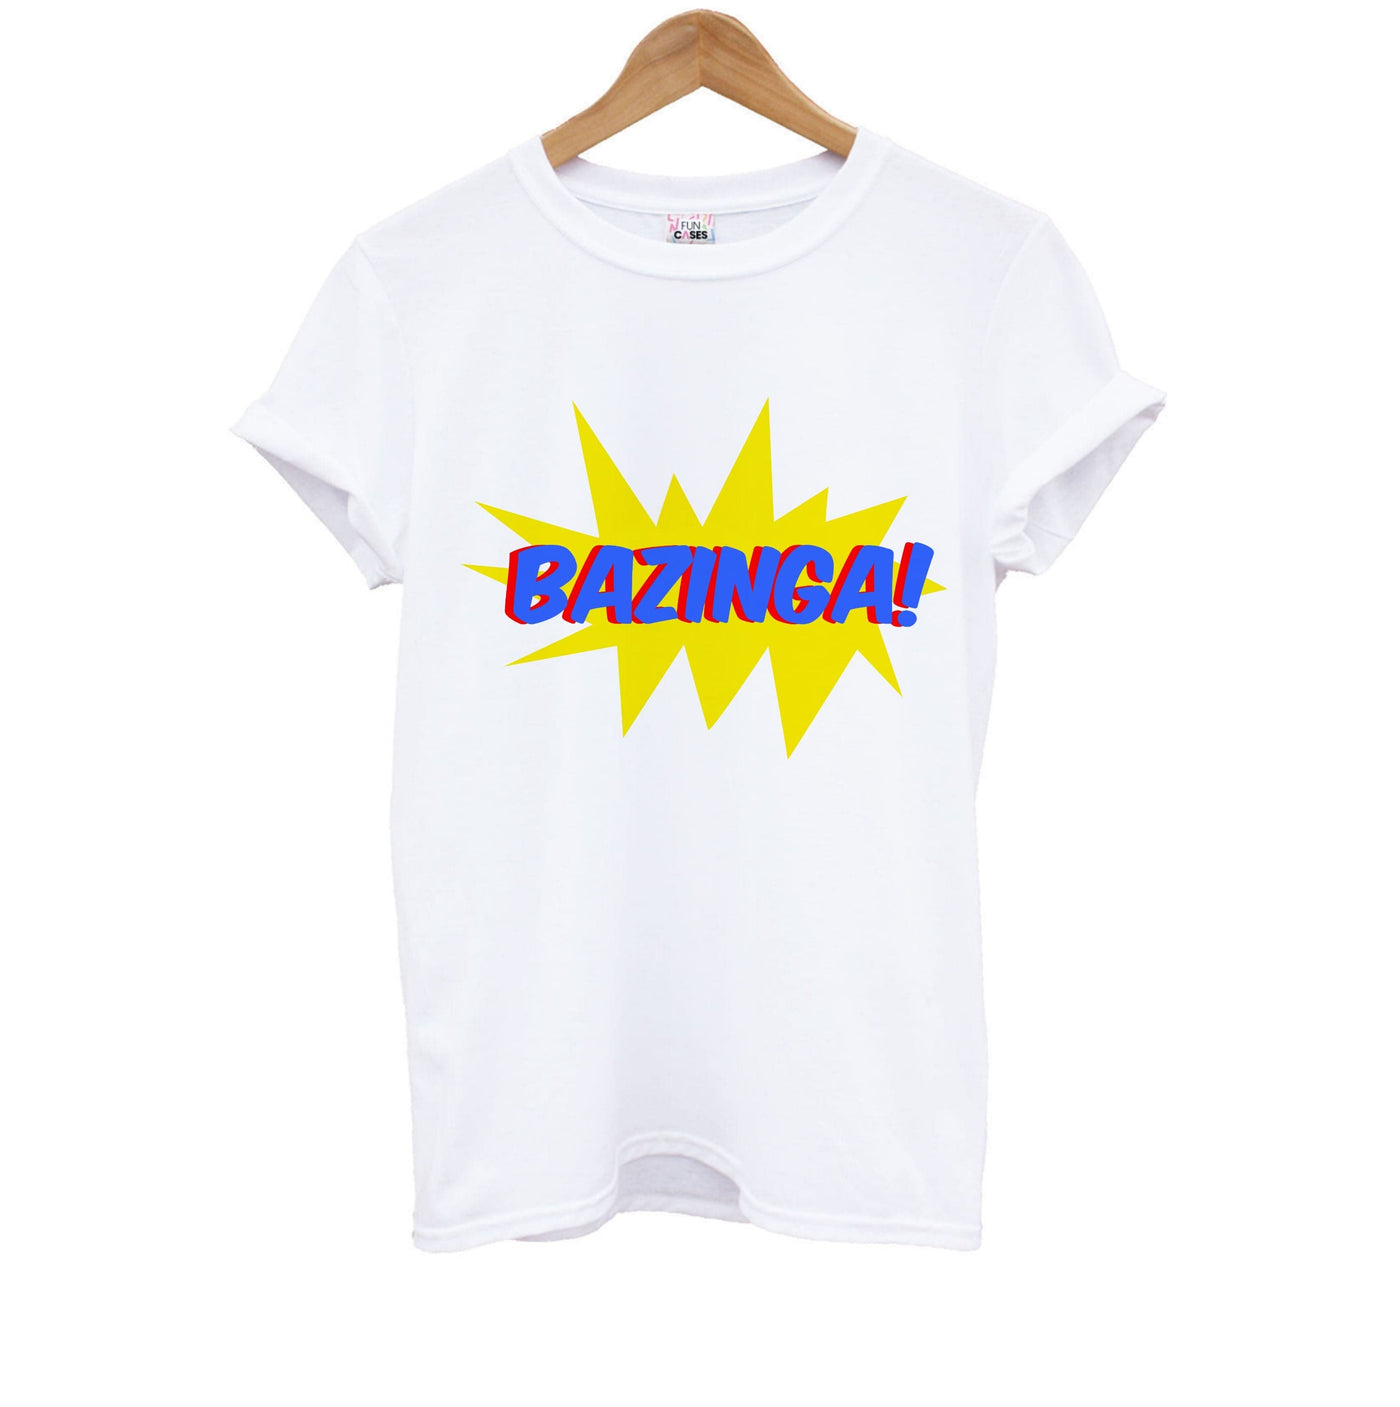 Bazinga! - TV Quotes Kids T-Shirt